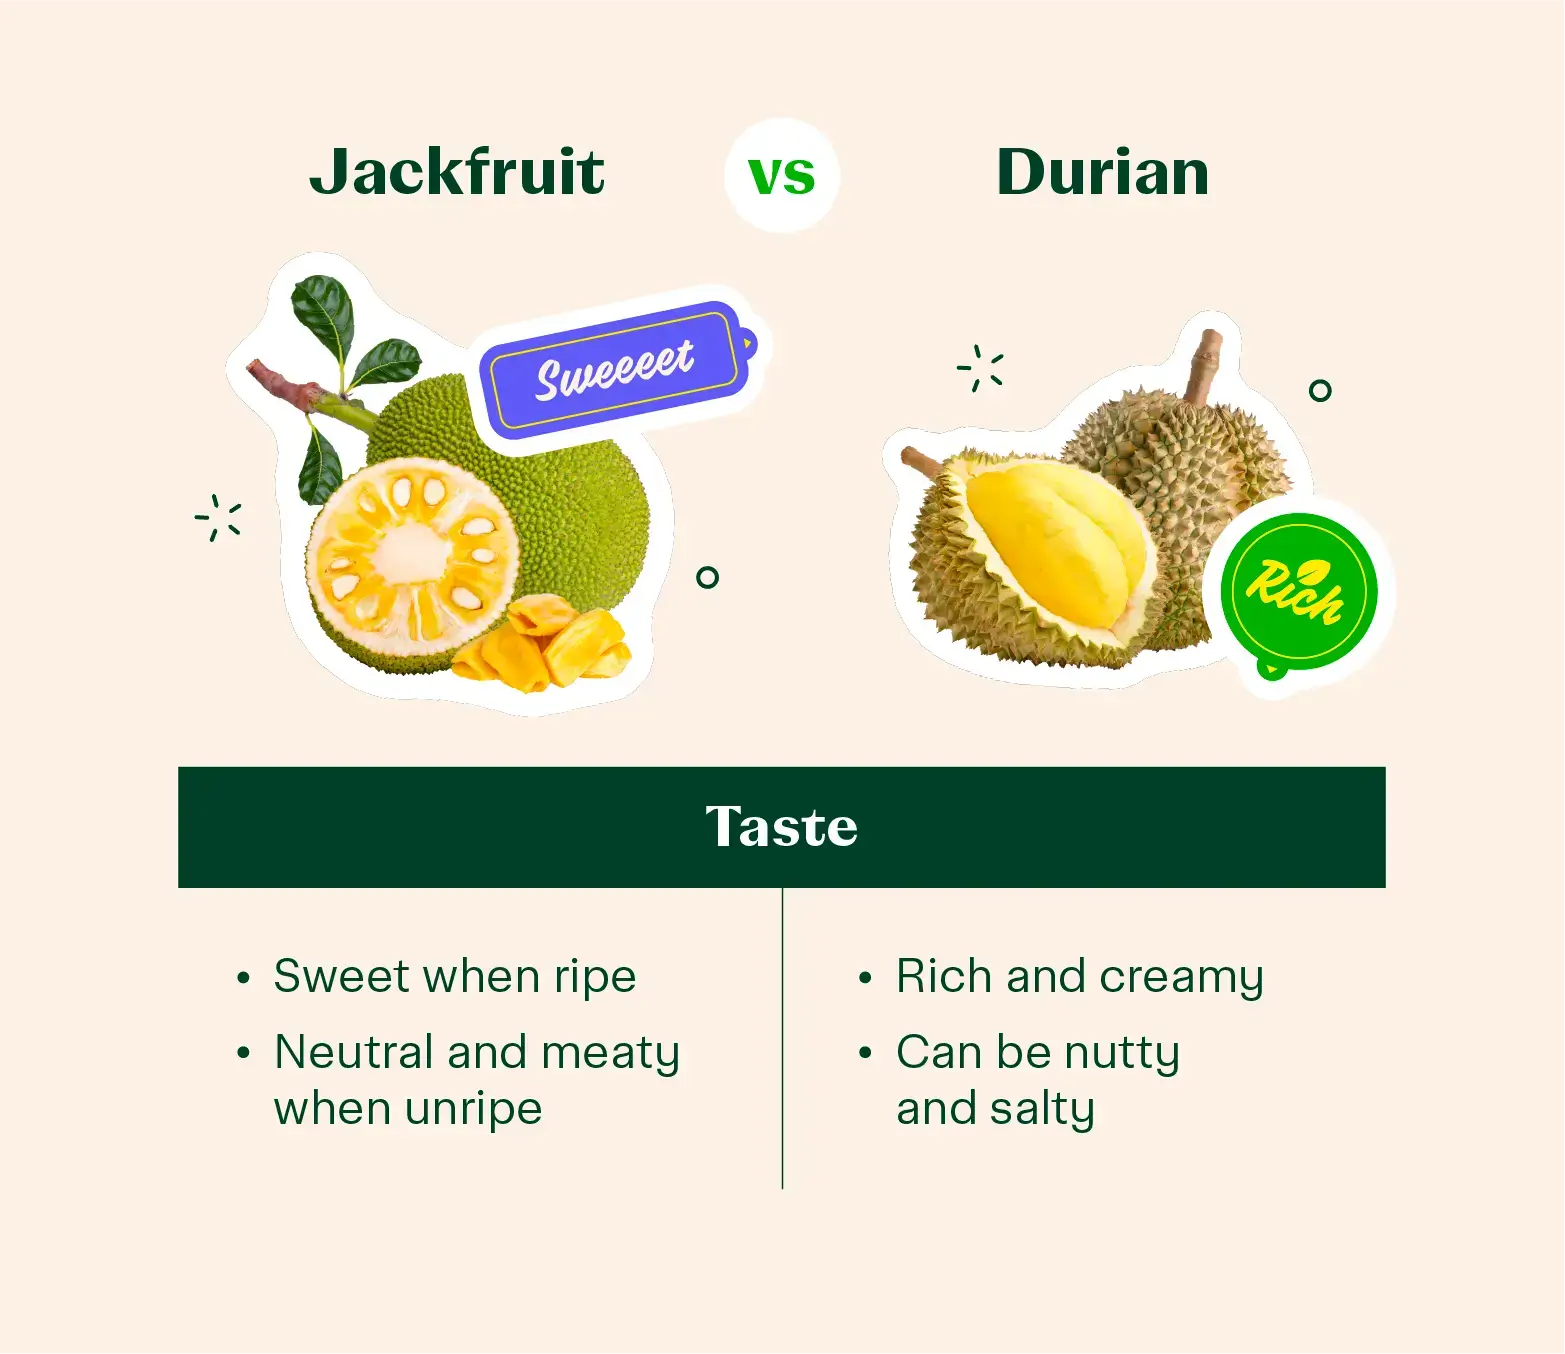 jackfruit vs durian taste comparison graphic